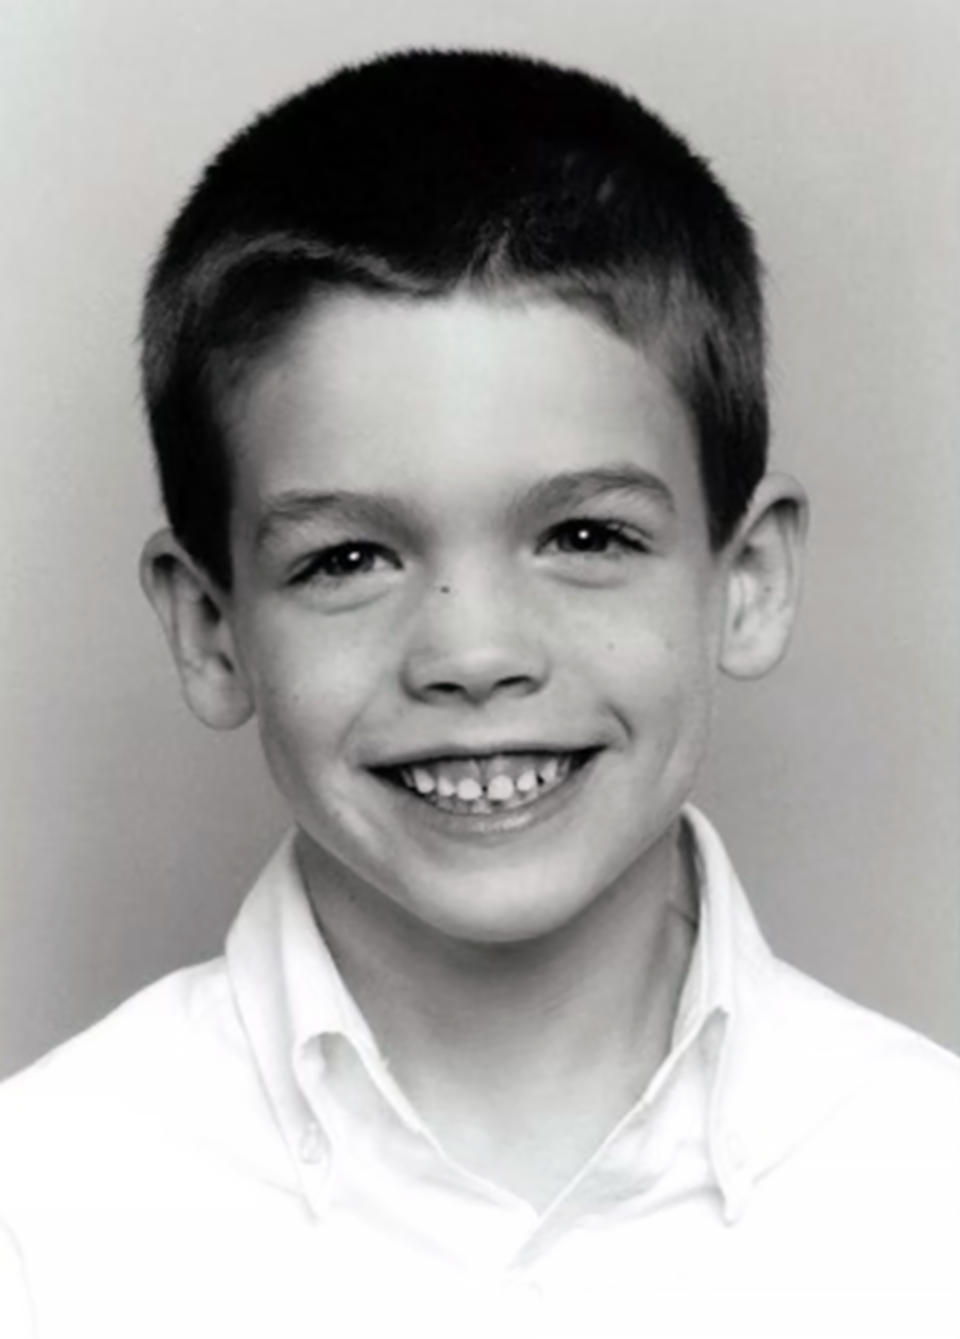 Cameron Coppen as a child, all smiles. (Courtesy Stephanie Coppen)